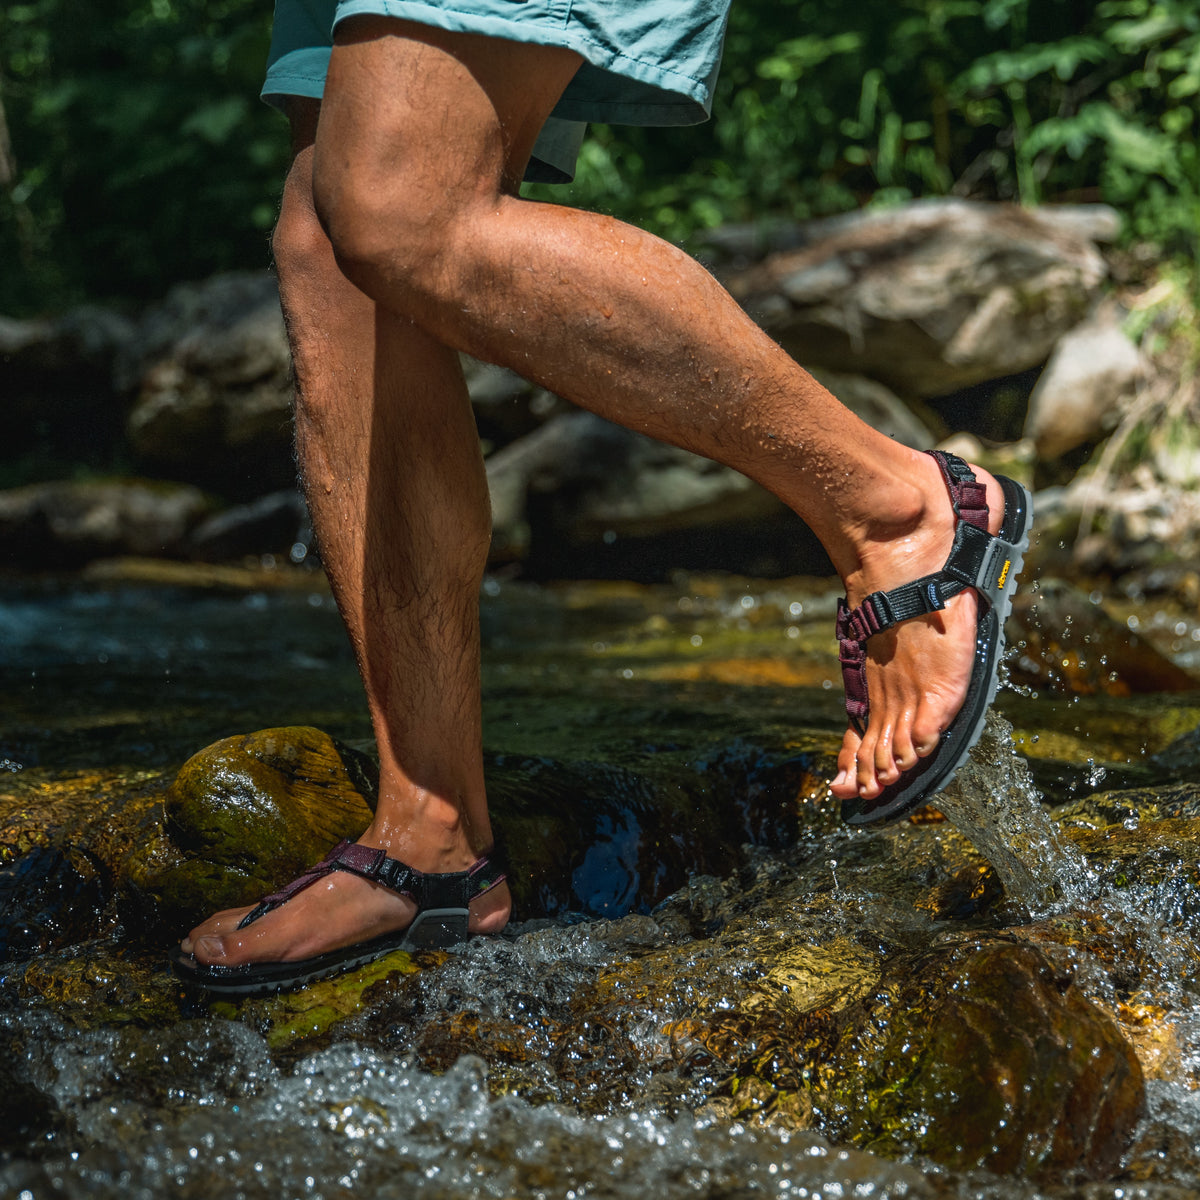 Bedrock Sandals®: Footwear Built to Free your Outdoor Soul